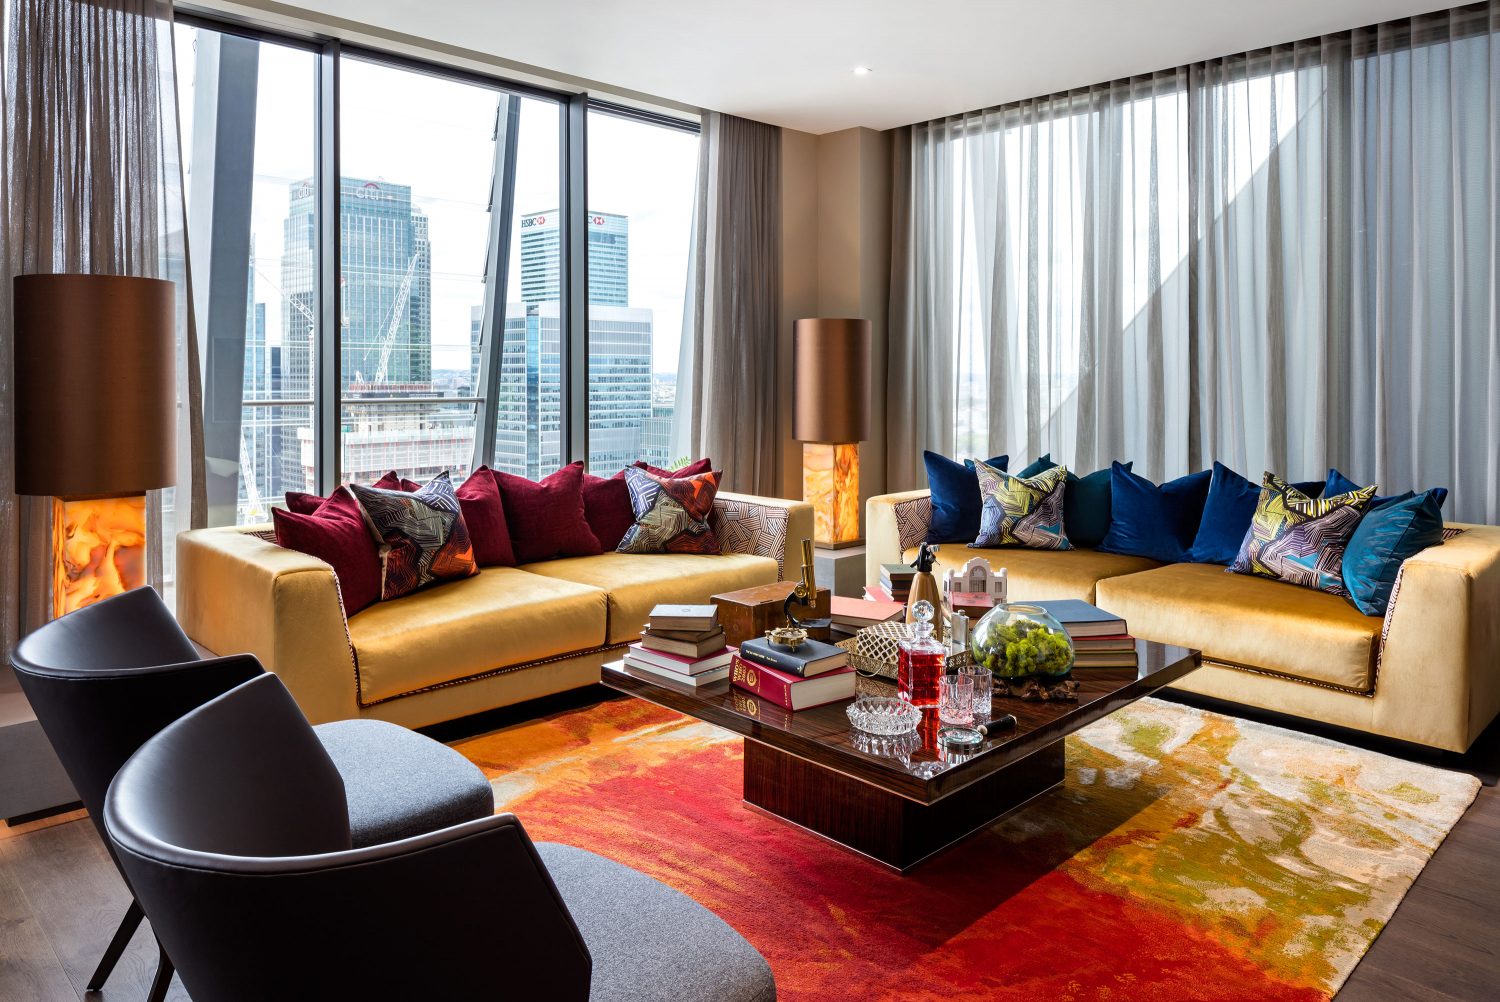 Daniel Hopwood Dollar Bay penthouse design. Clashing colours in living room interior